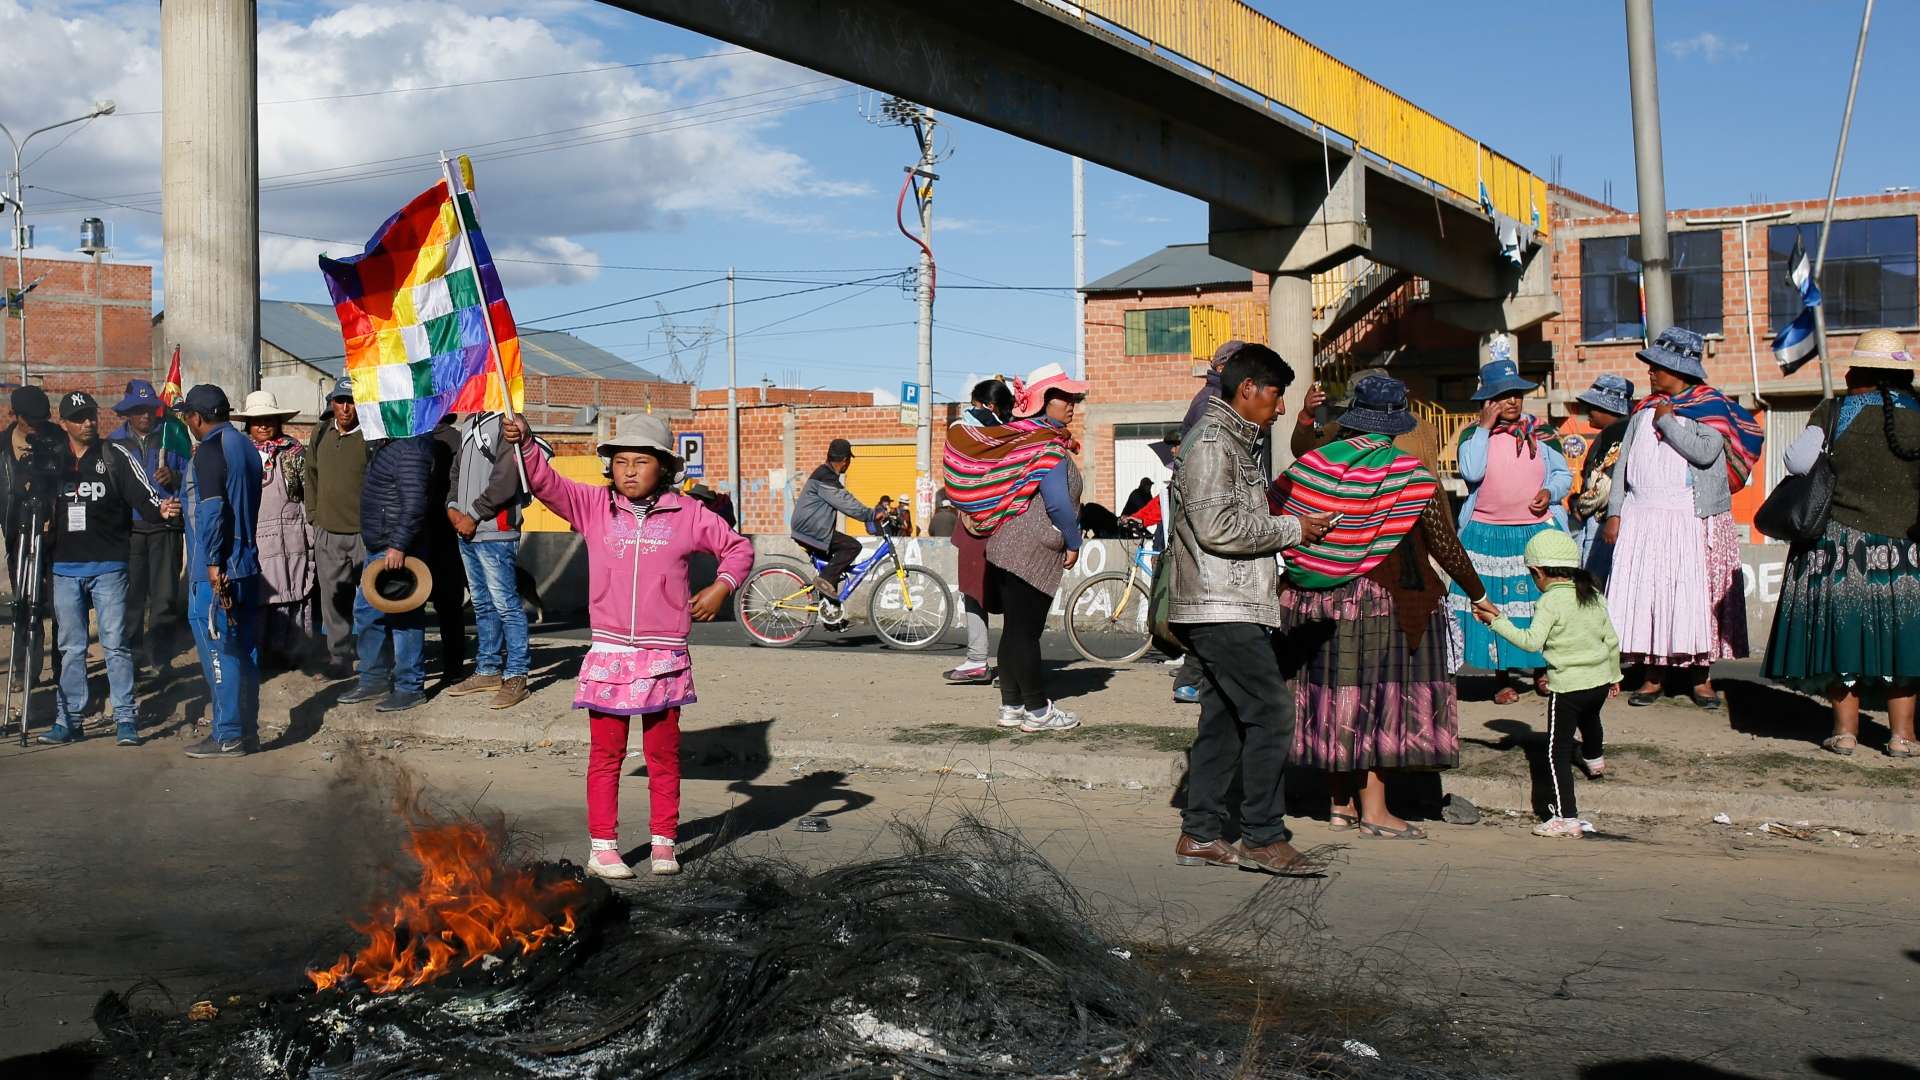 Protests in Bolivia & Chile